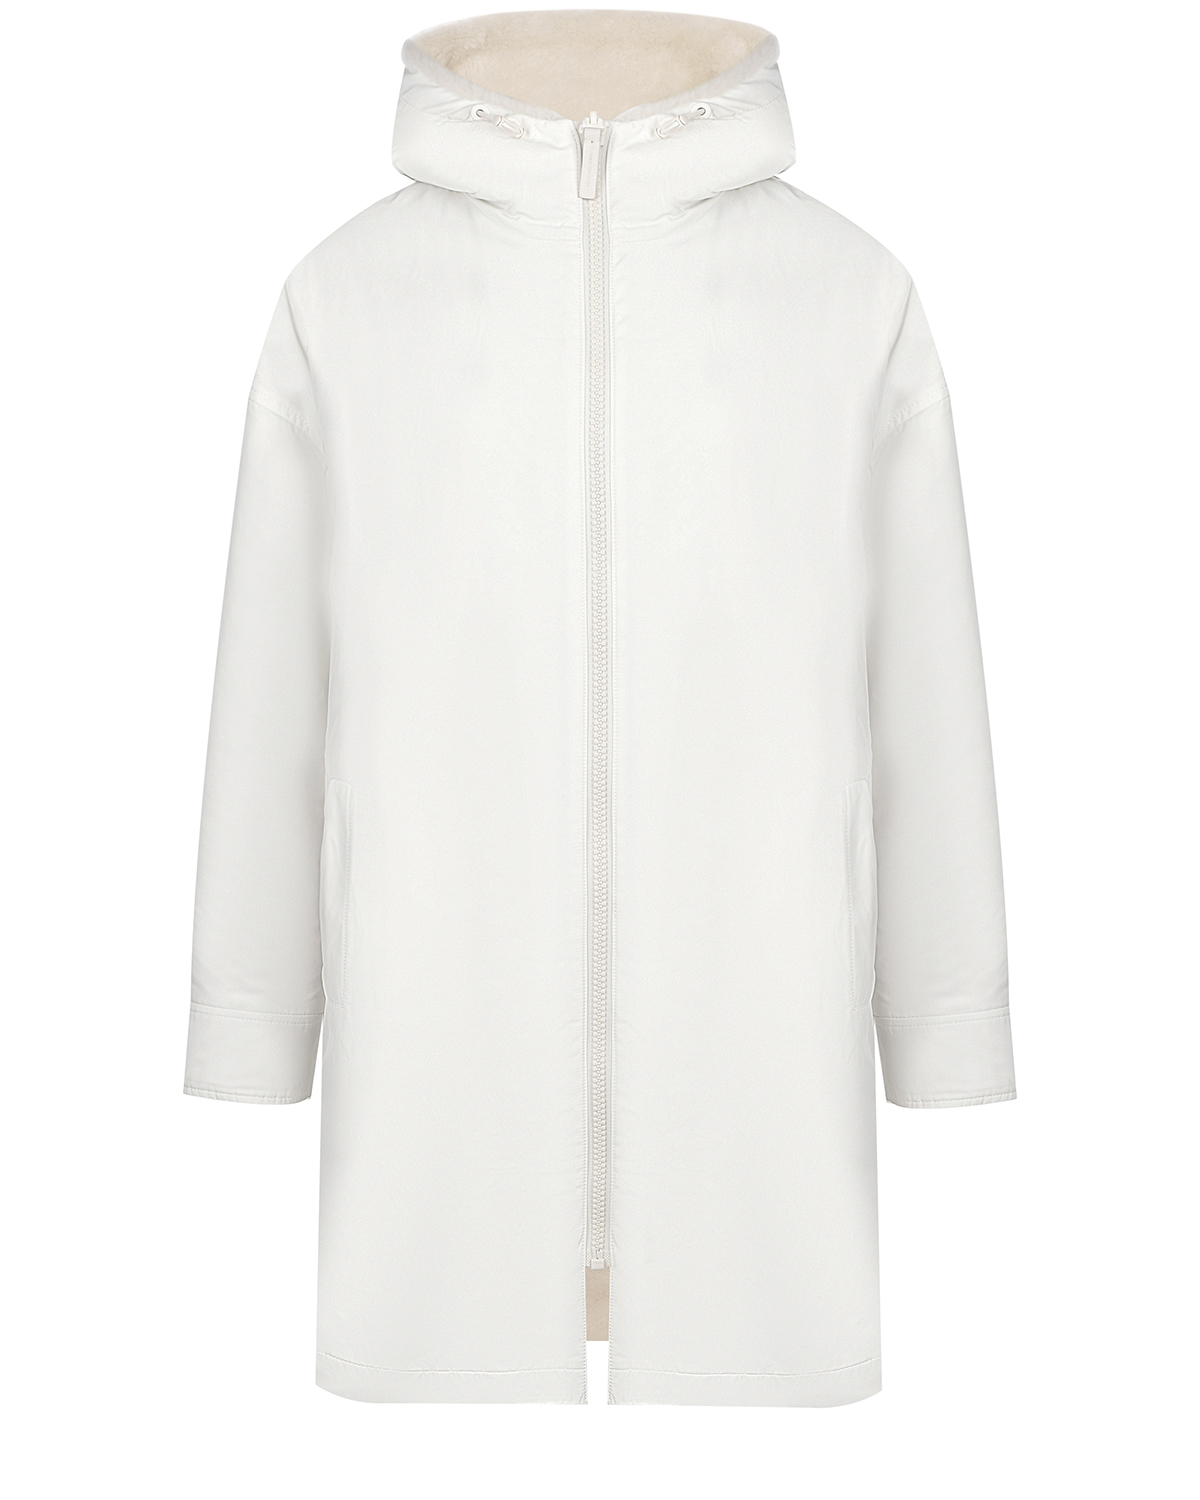 Двухстороннее пальто из овчины Yves Salomon, размер 36, цвет нет цвета - фото 1